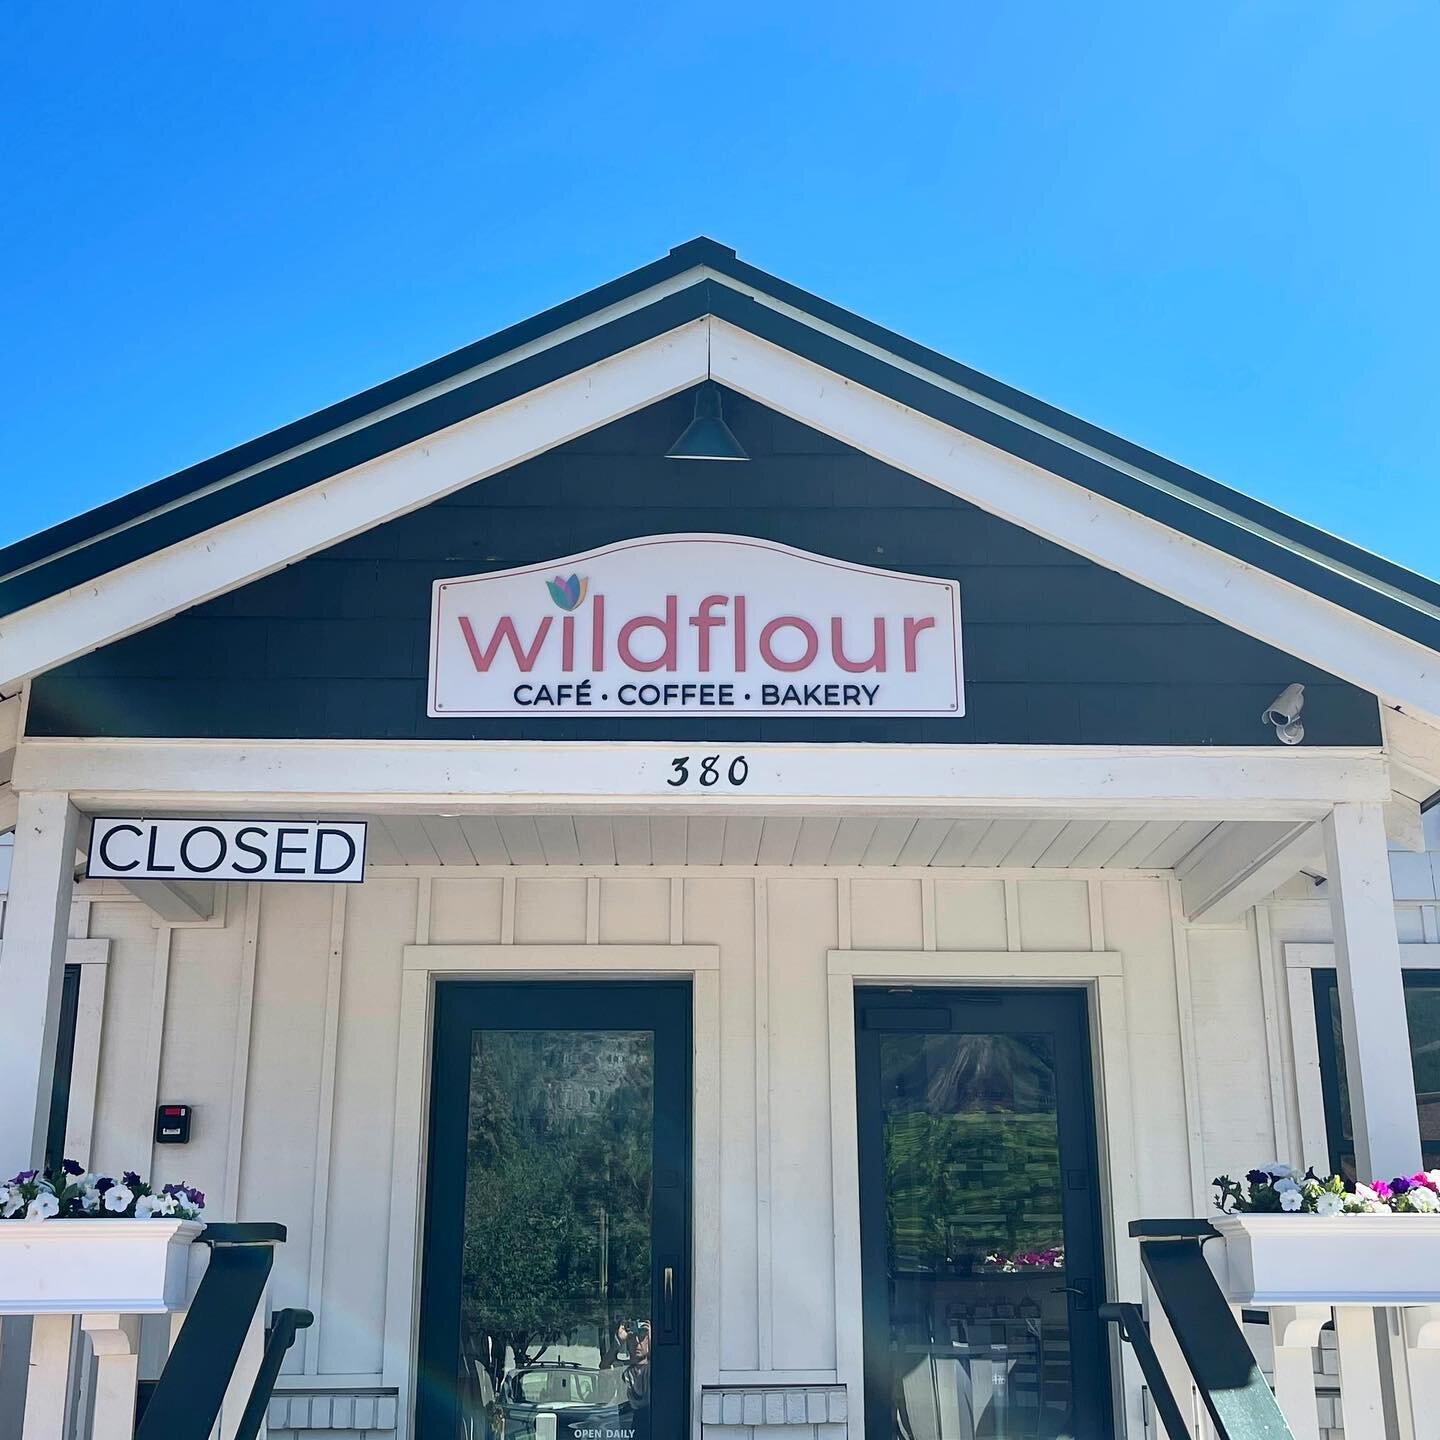 Wildflour 🤩

#windycitysv #bakery #coffee #cafe #wildflour #signs #new #localbusiness